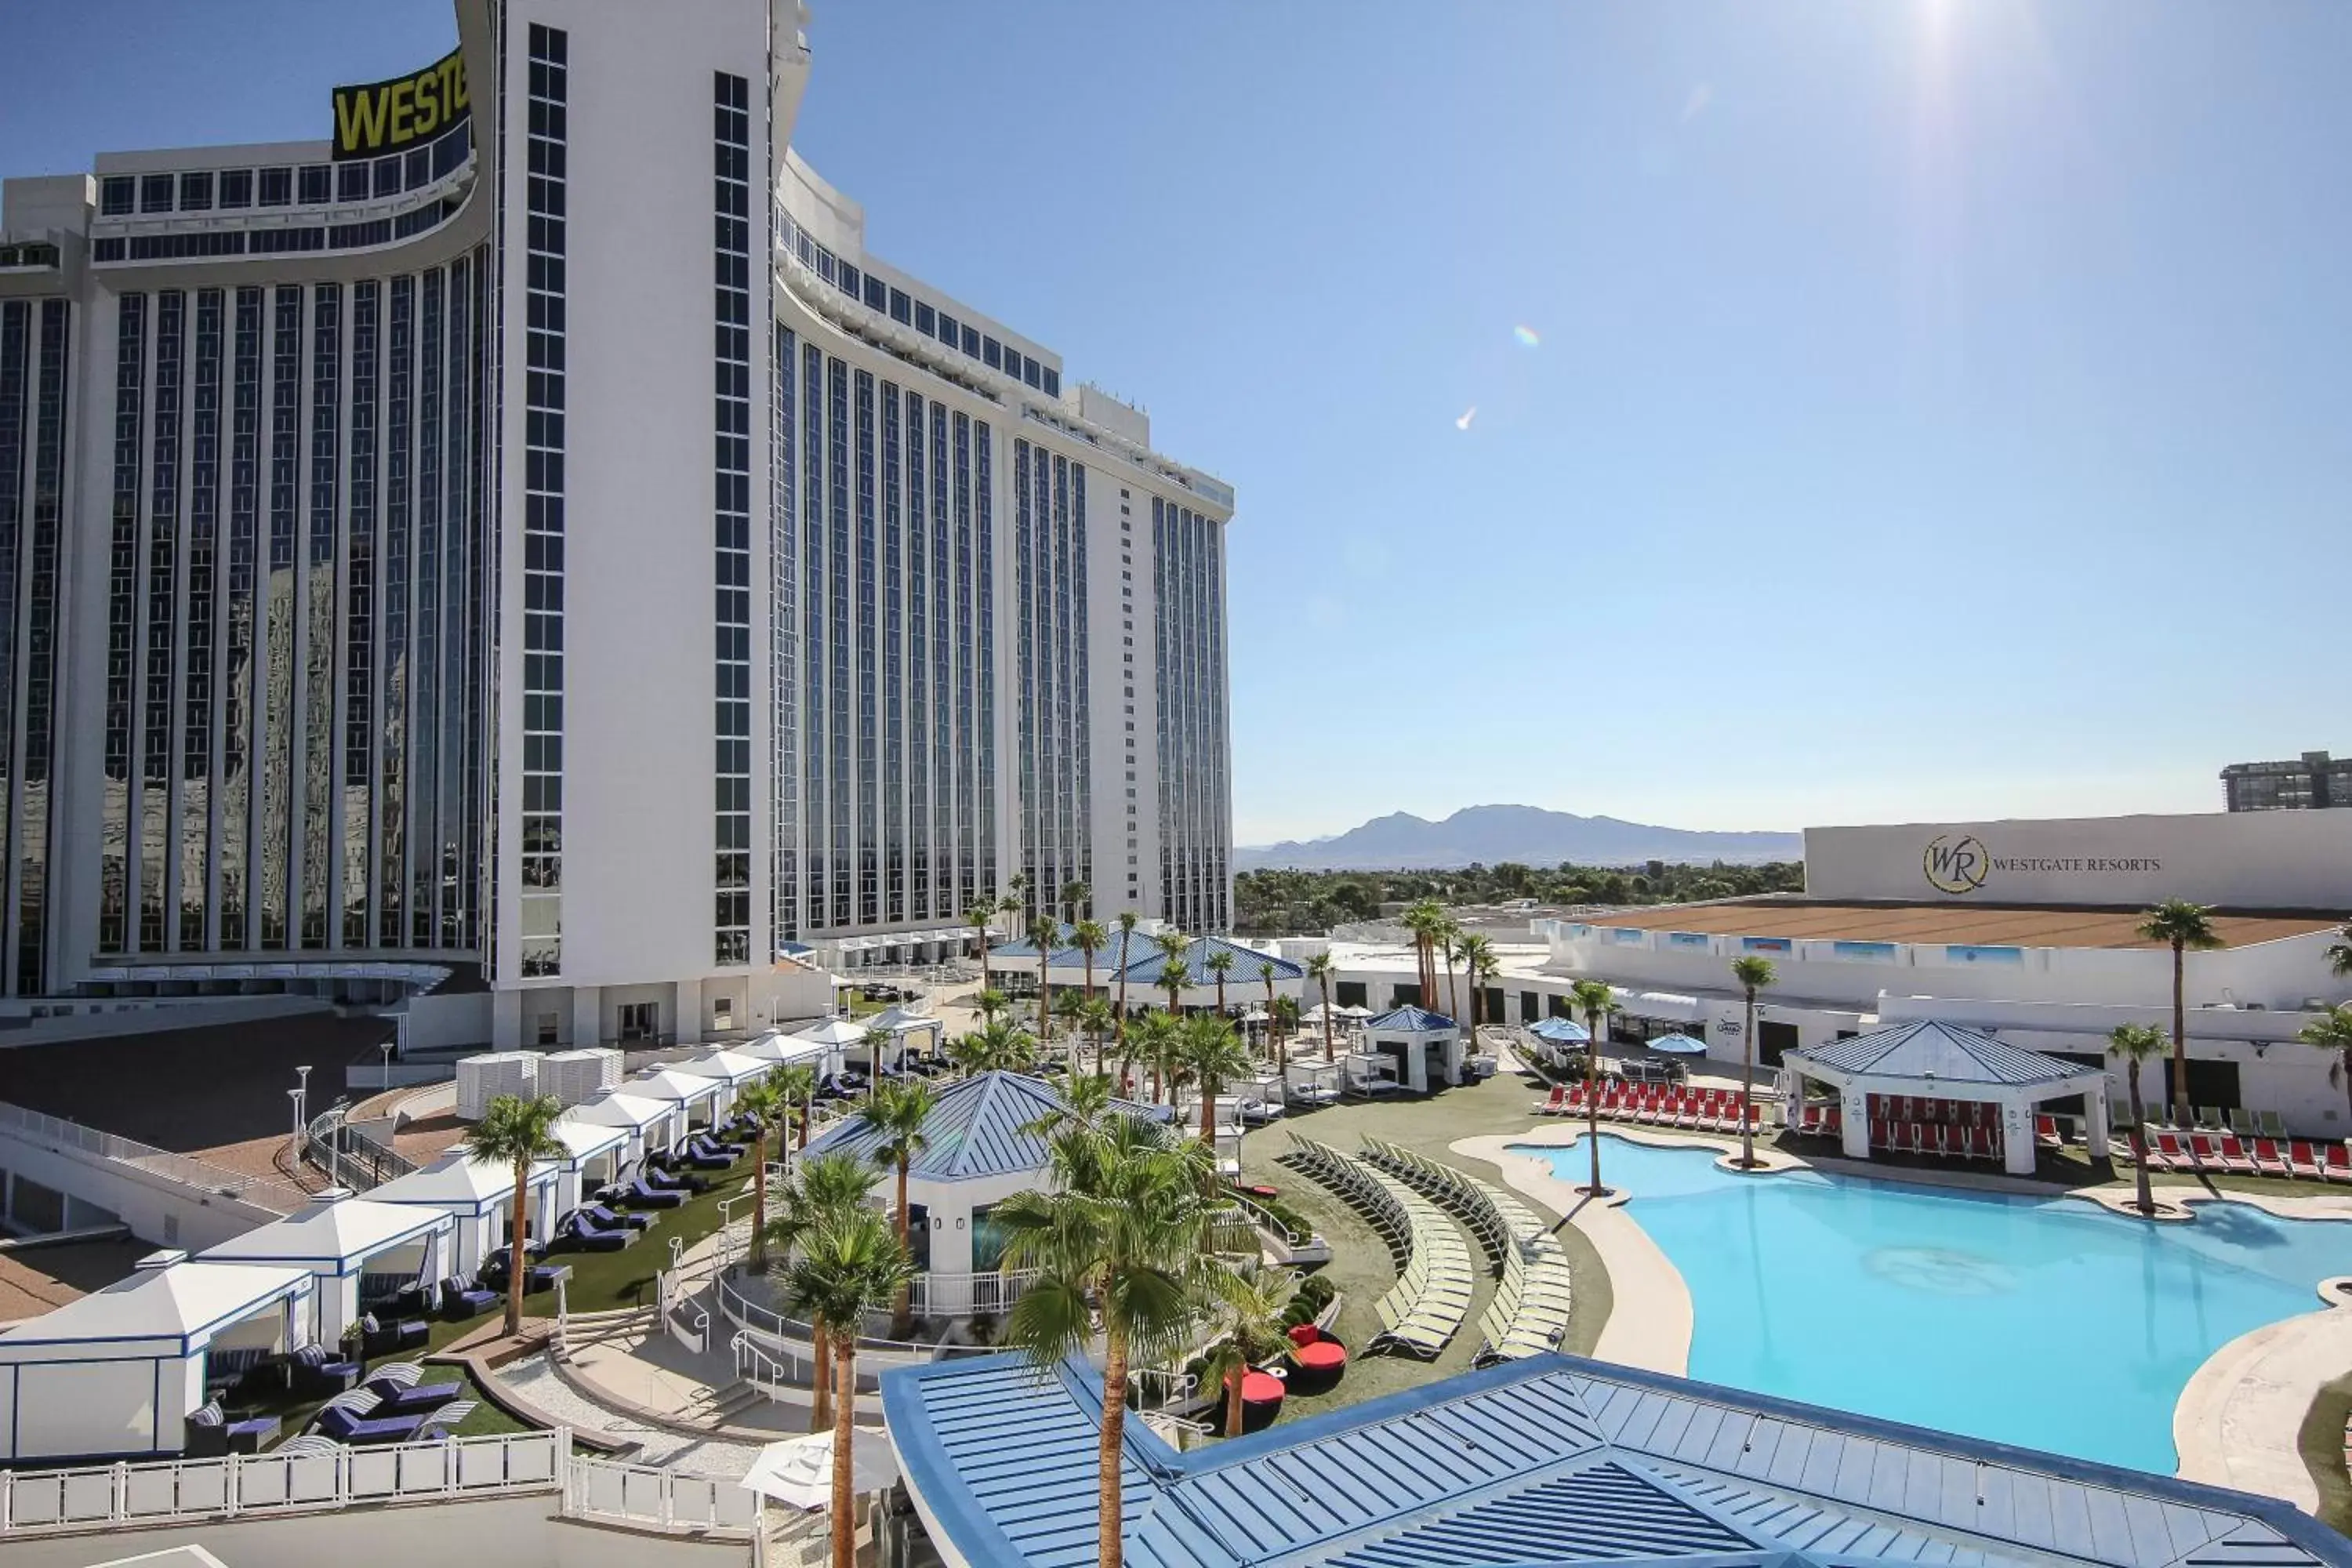 Swimming pool in Westgate Las Vegas Resort and Casino